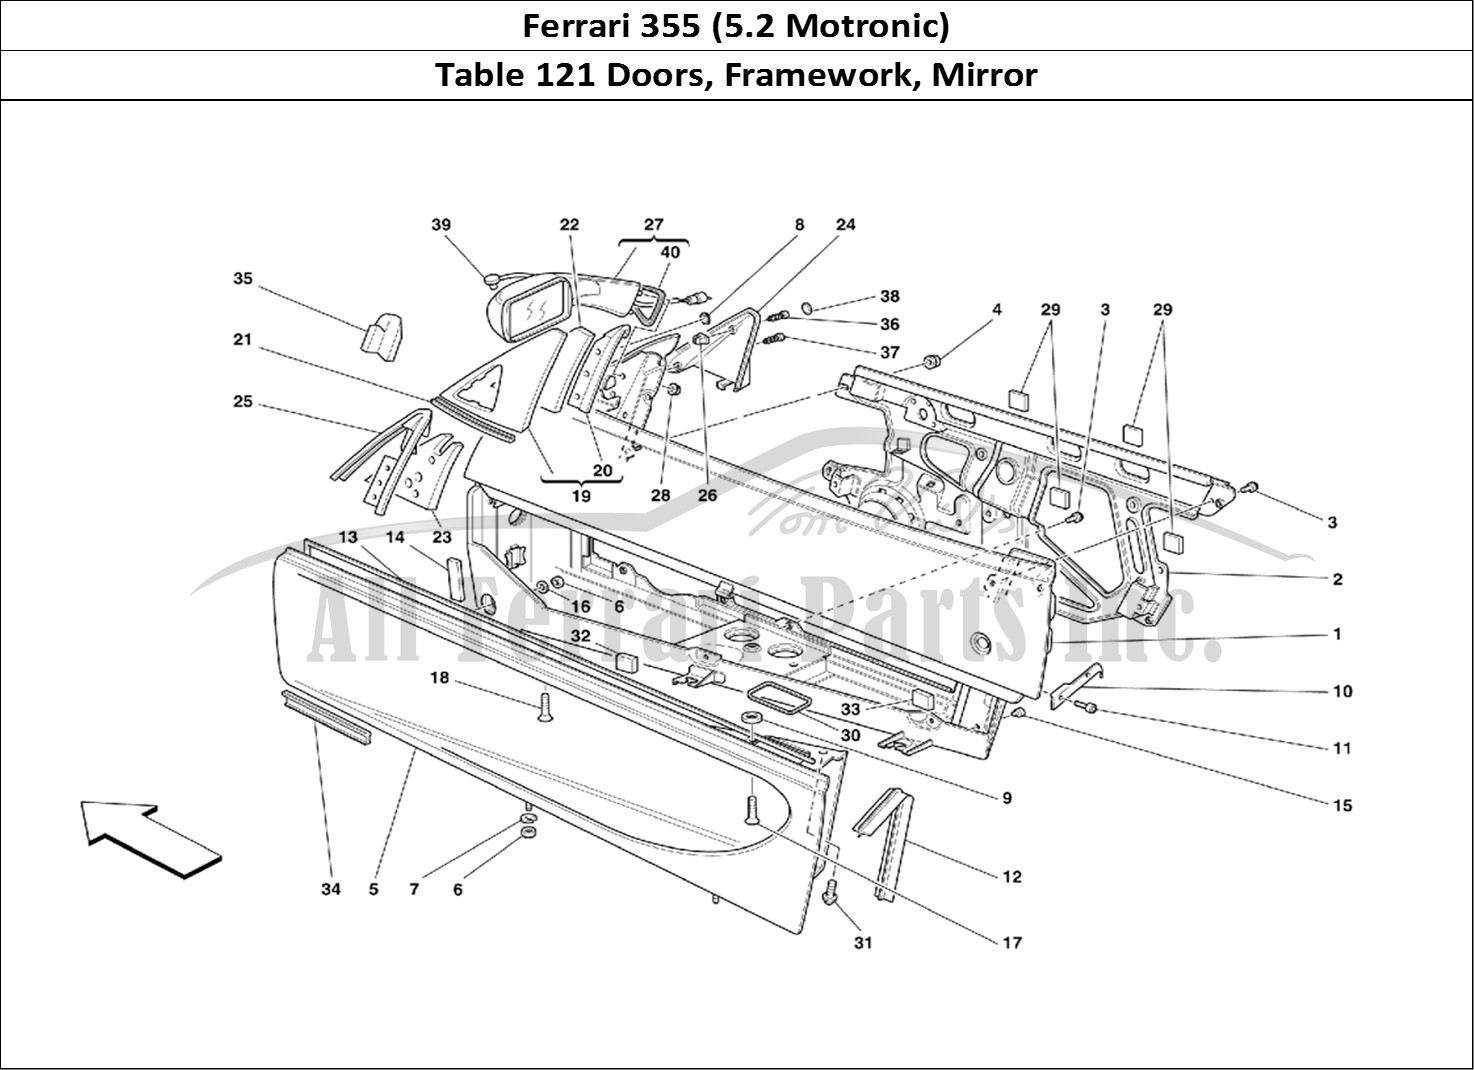 Ferrari Parts Ferrari 355 (5.2 Motronic) Page 121 Doors - Framework and Rea